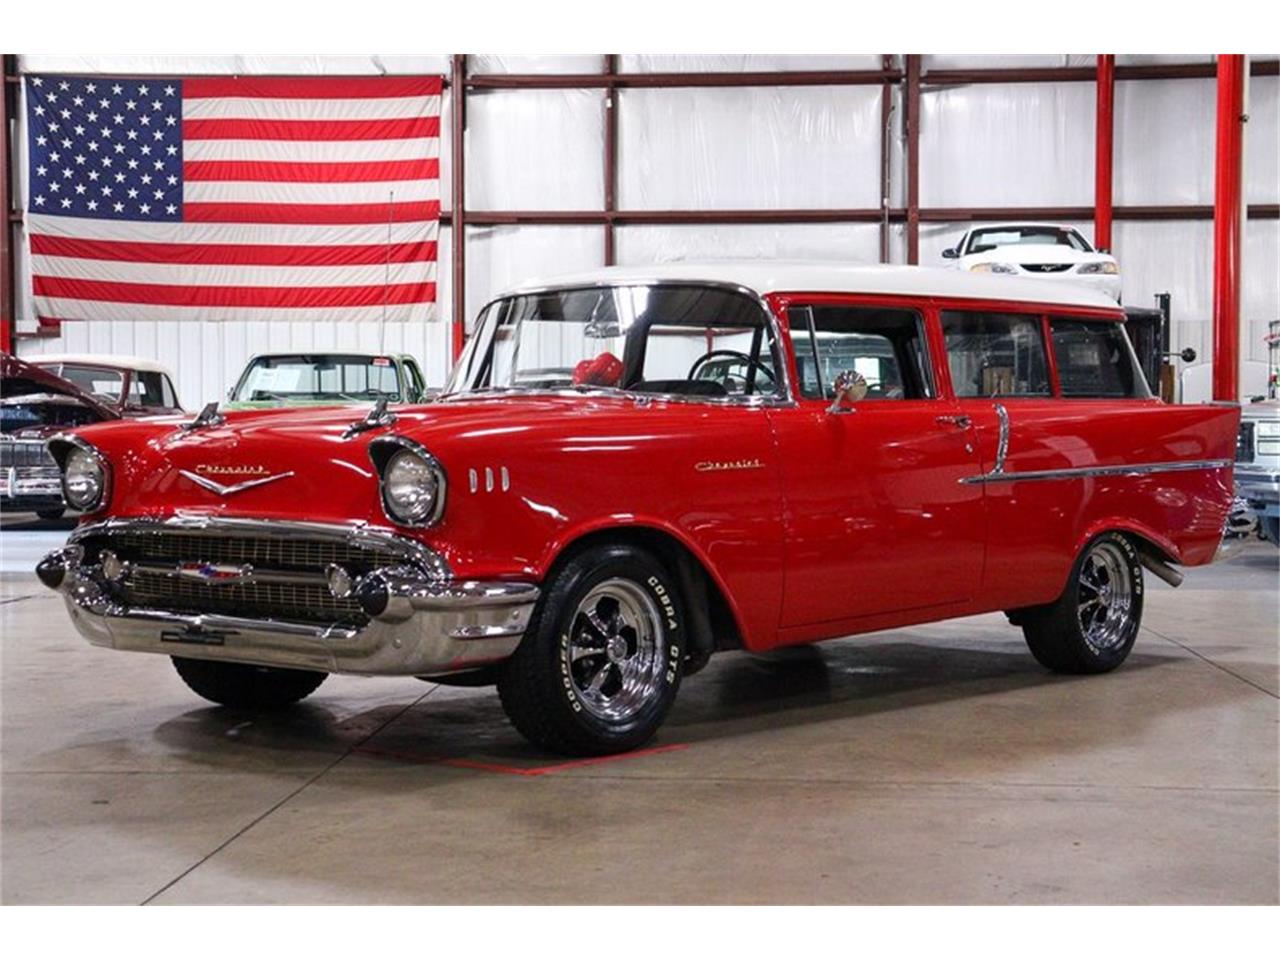 For Sale: 1957 Chevrolet Wagon in Ken2od, Michigan for sale in Grand Rapids, MI